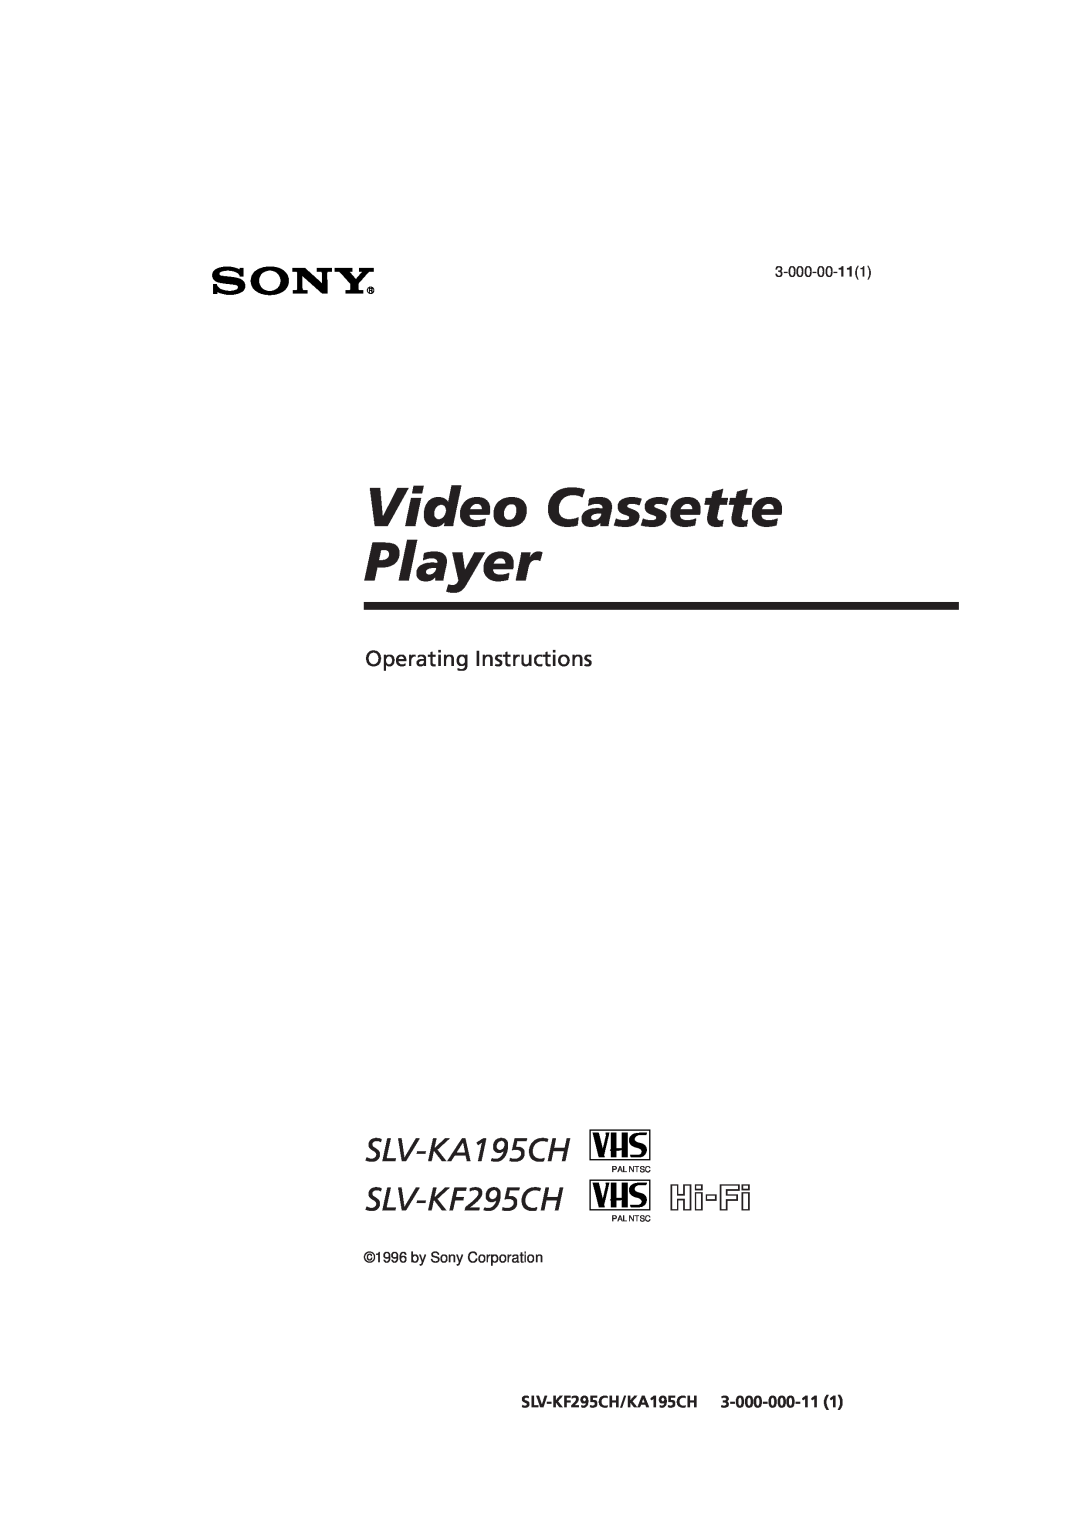 Sony SLV-KA195CH manual Video Cassette Player, SLV-KF295CH G, Operating Instructions, SLV-KF295CH/KA195CH, 3-000-00-111 